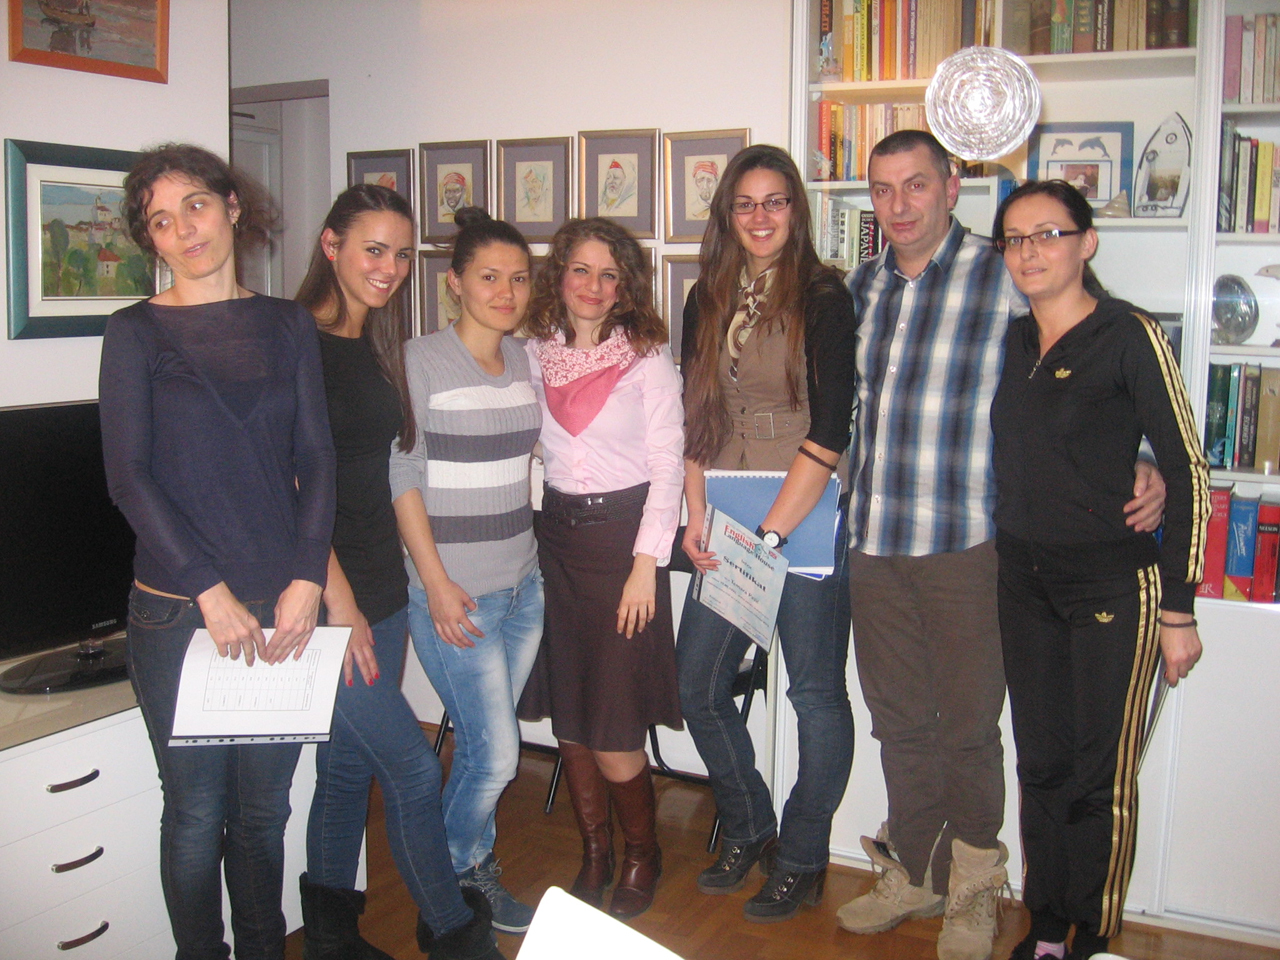 ENGLISH LANGUAGE HOUSE Škole stranih jezika Beograd